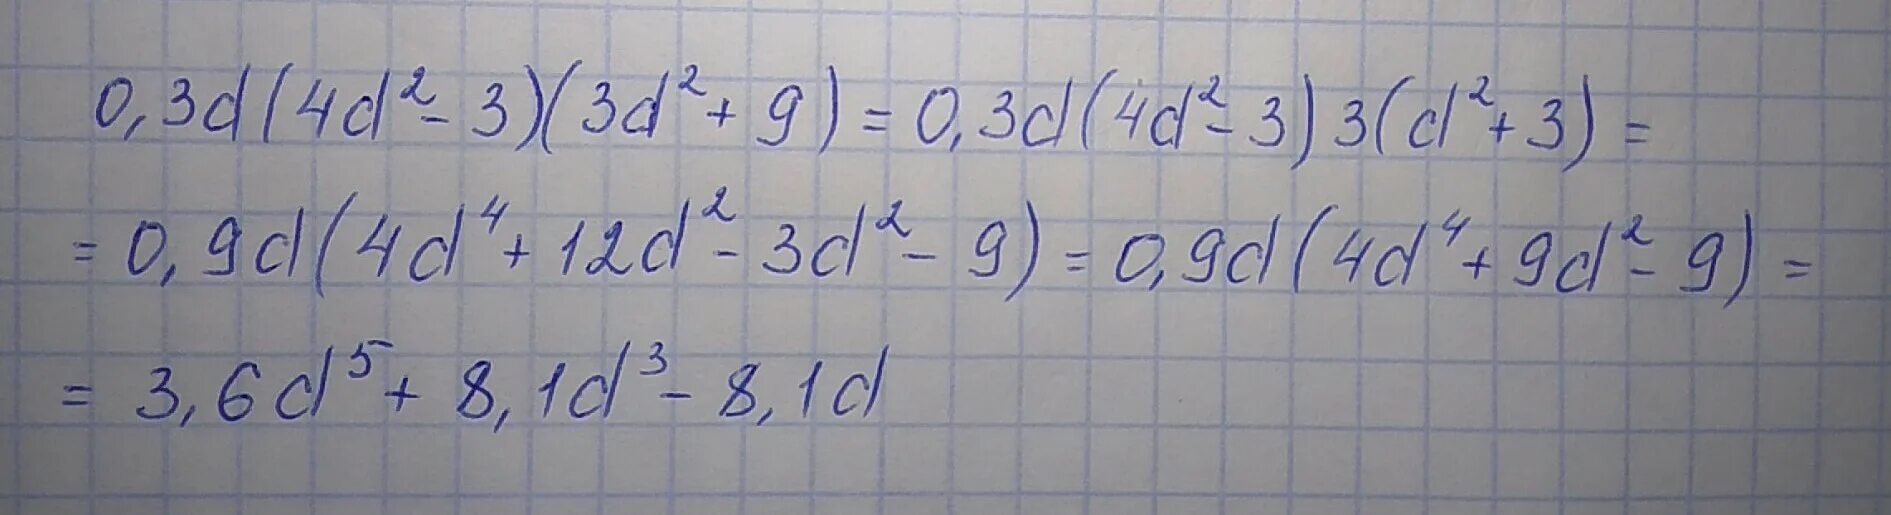 Выполните действие 3 5 0 04. Выполни действия 0,1d(3d^2 -3)(3d^2 +6). Выполните действия 0,4d(3d 2-3)(3d 2+5). Выполни действия 0,2d(4d2-3)(3d2+8). Выполните действие 0,4d(2d^2-3)(3d^2+6).